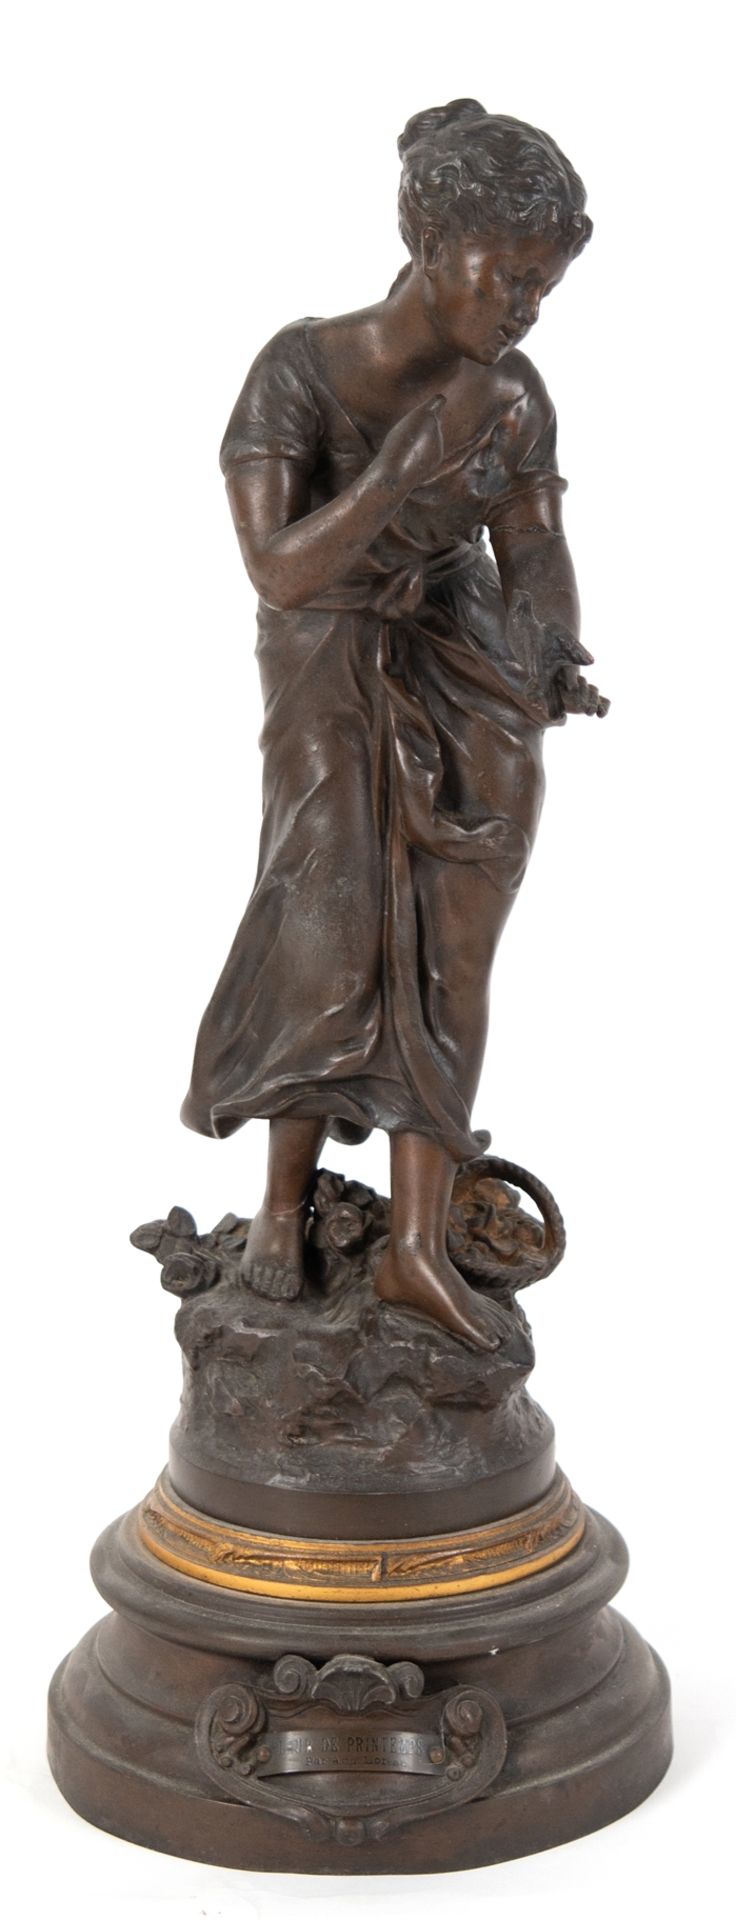 Skulptur "Fleur de Printemps" nach Aug. Moreau, Metallguß bronziert, Frankreich Anfang 20. Jh., auf